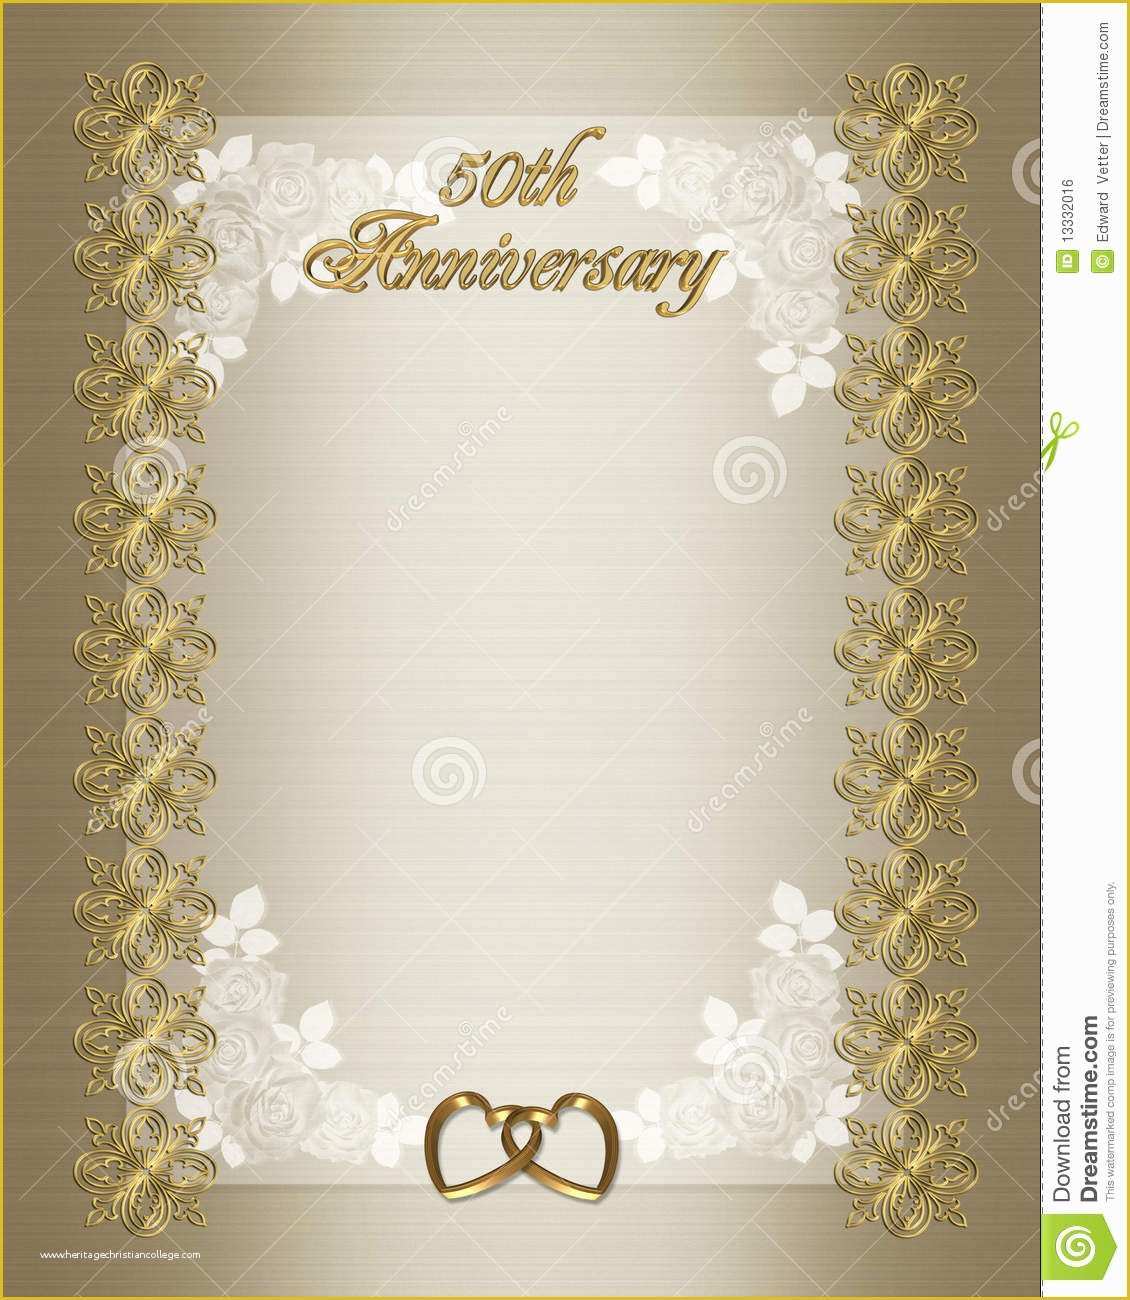 50th Wedding Anniversary Invitations Templates Free Download Of 50th Wedding Anniversary Invitation Template Stock